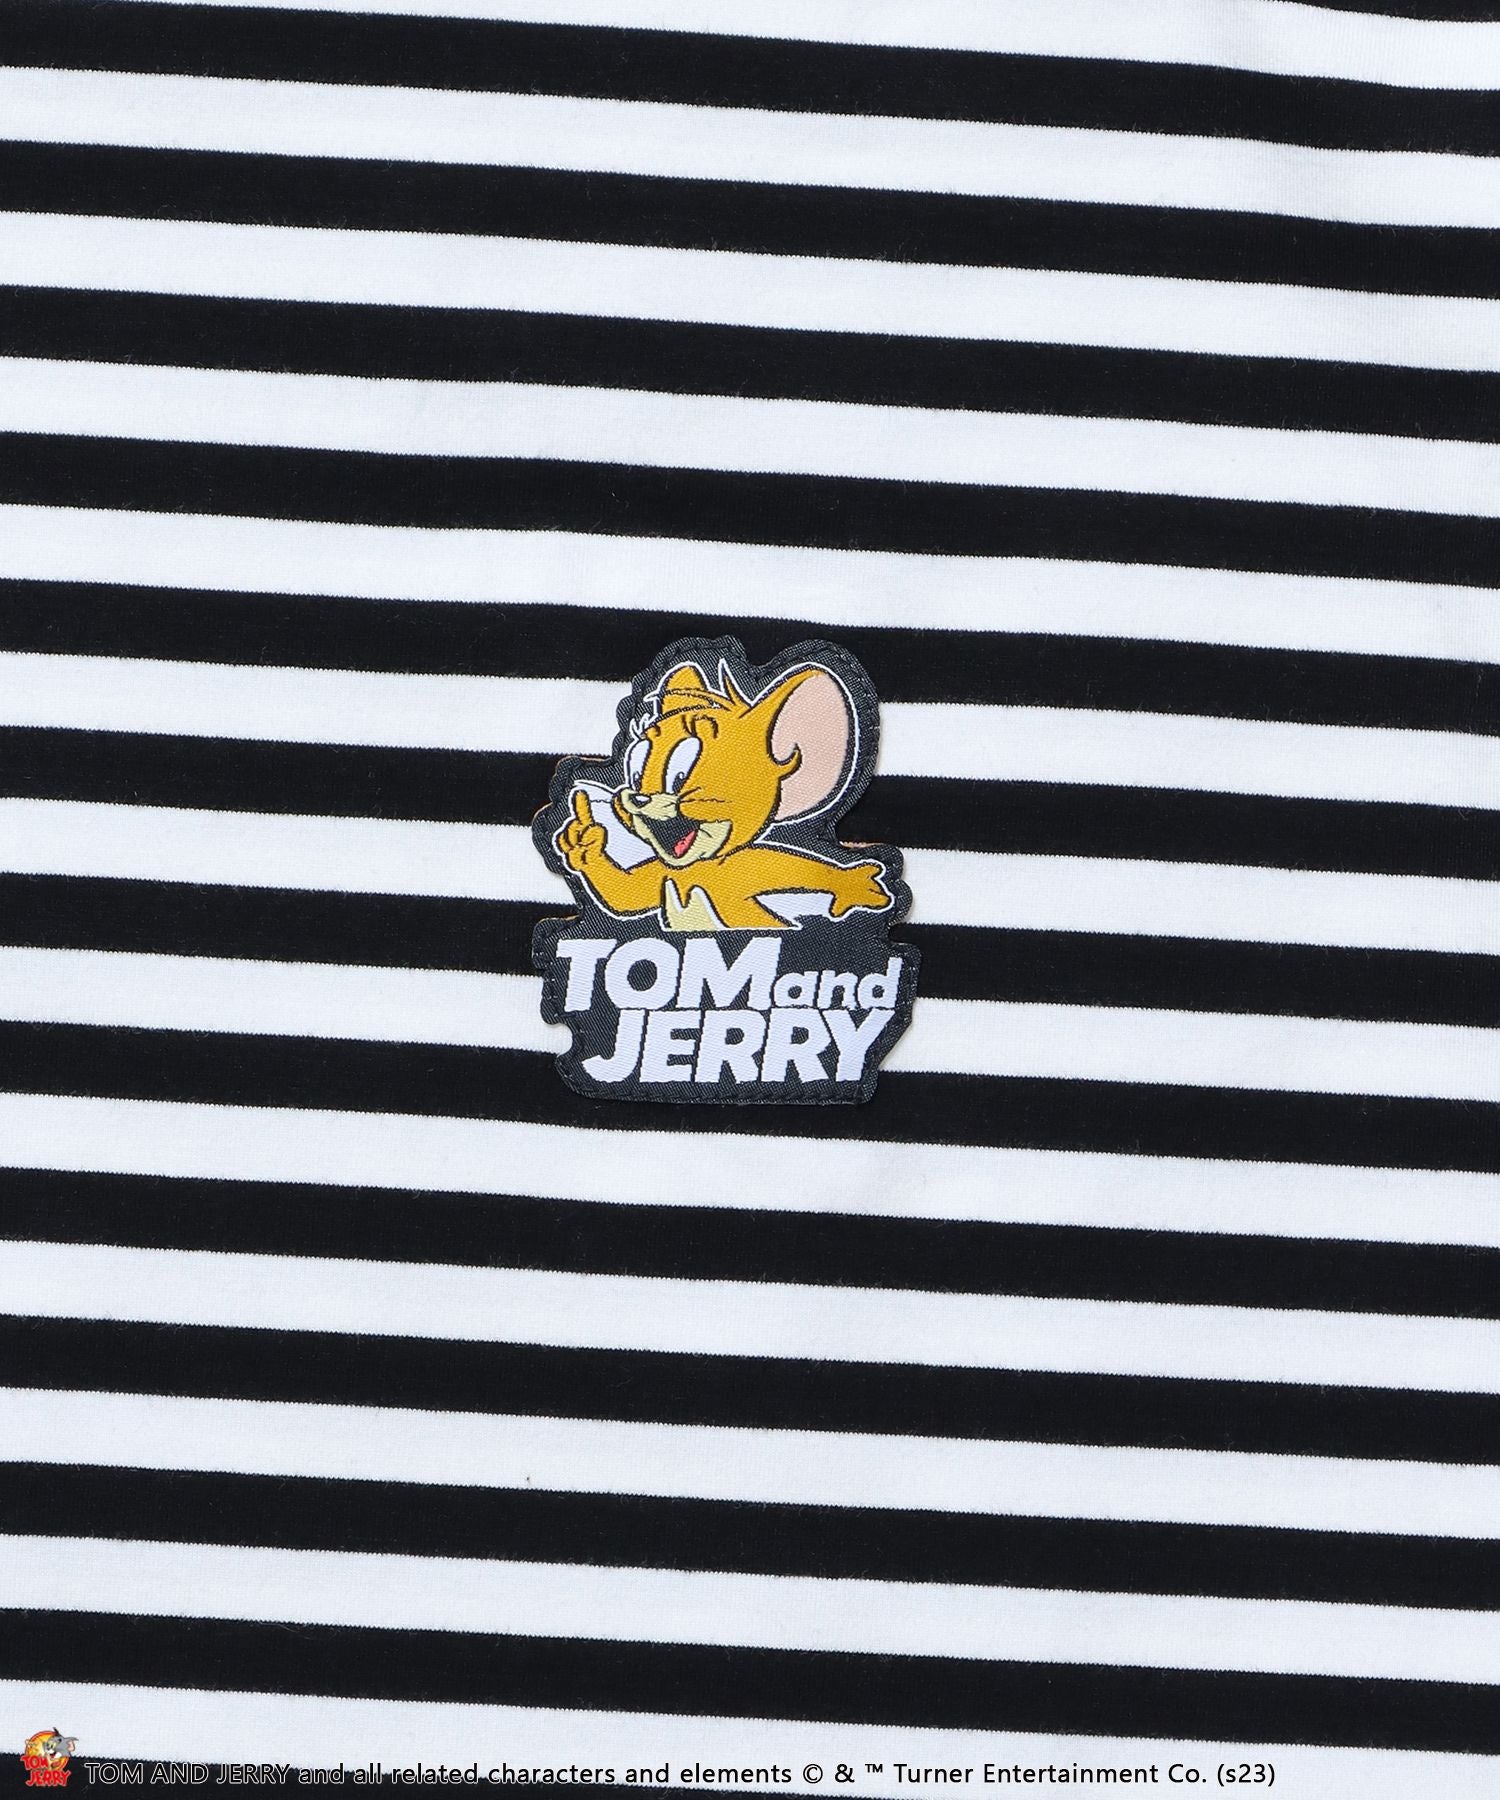 【SEQUENZ】 TOM and JERRY BORDER L/S TEE / トムとジェリー ロンT ビックサイズ キャラクター 刺繍 リンガー  Tシャツ ホワイト